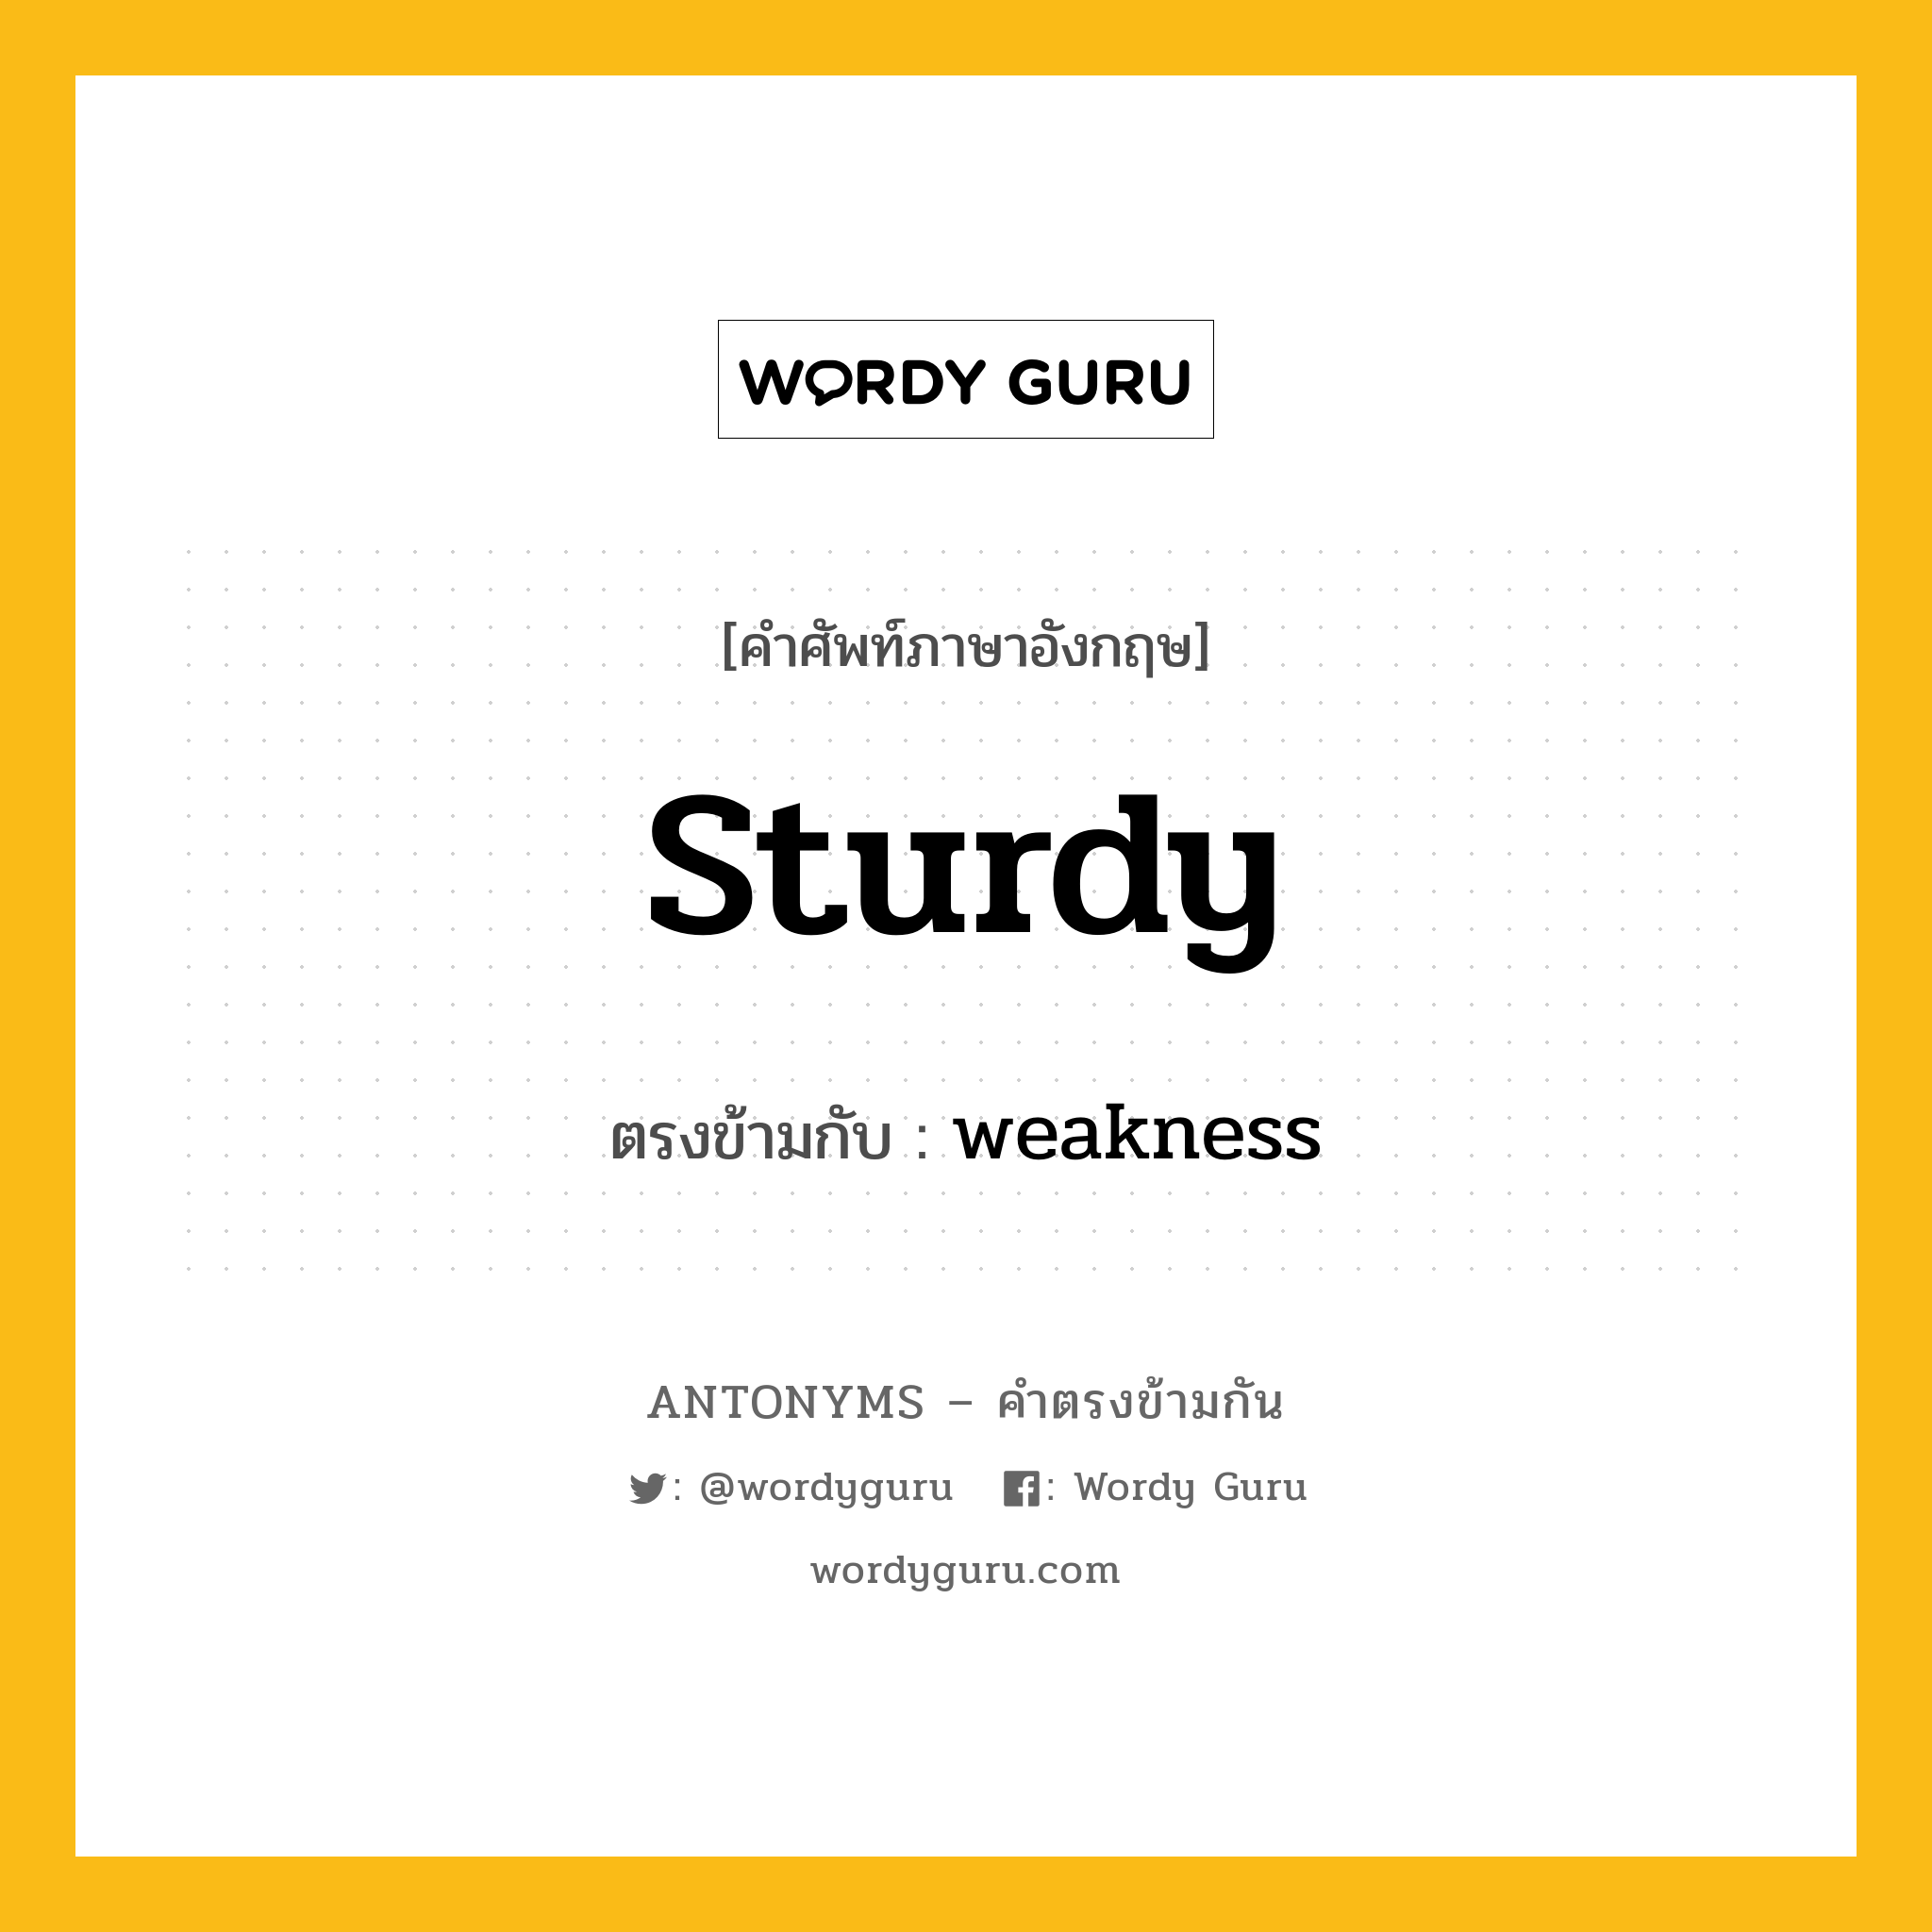 sturdy เป็นคำตรงข้ามกับคำไหนบ้าง?, คำศัพท์ภาษาอังกฤษ sturdy ตรงข้ามกับ weakness หมวด weakness